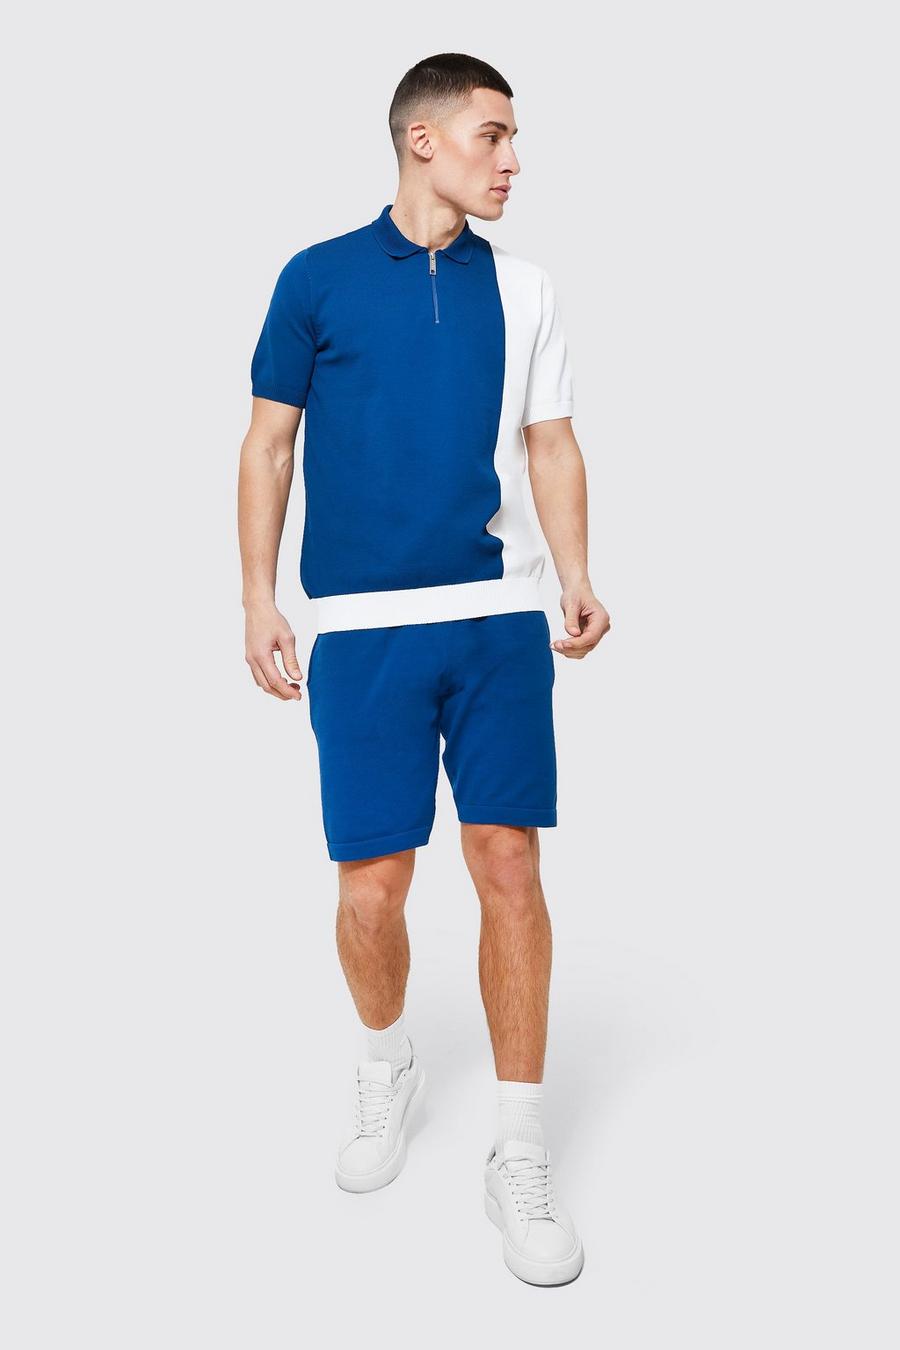 Kurzärmliges Colorblock Poloshirt & Shorts, Navy marine